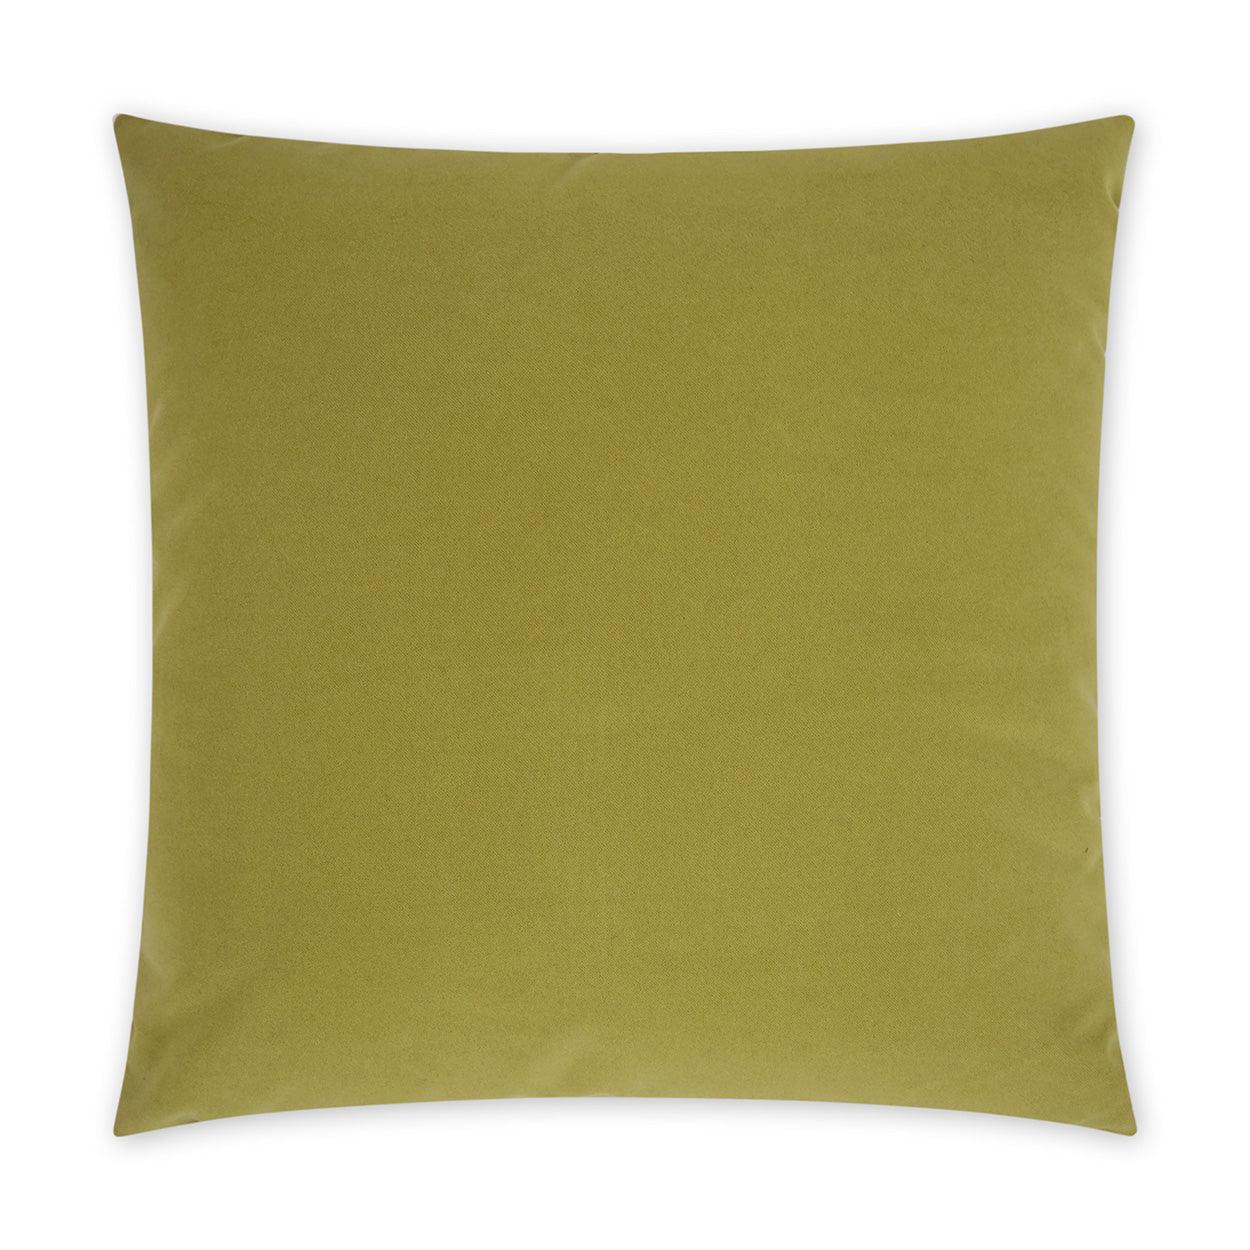 LOOMLAN Outdoor - Outdoor Sundance Pillow - Leaf - Outdoor Pillows